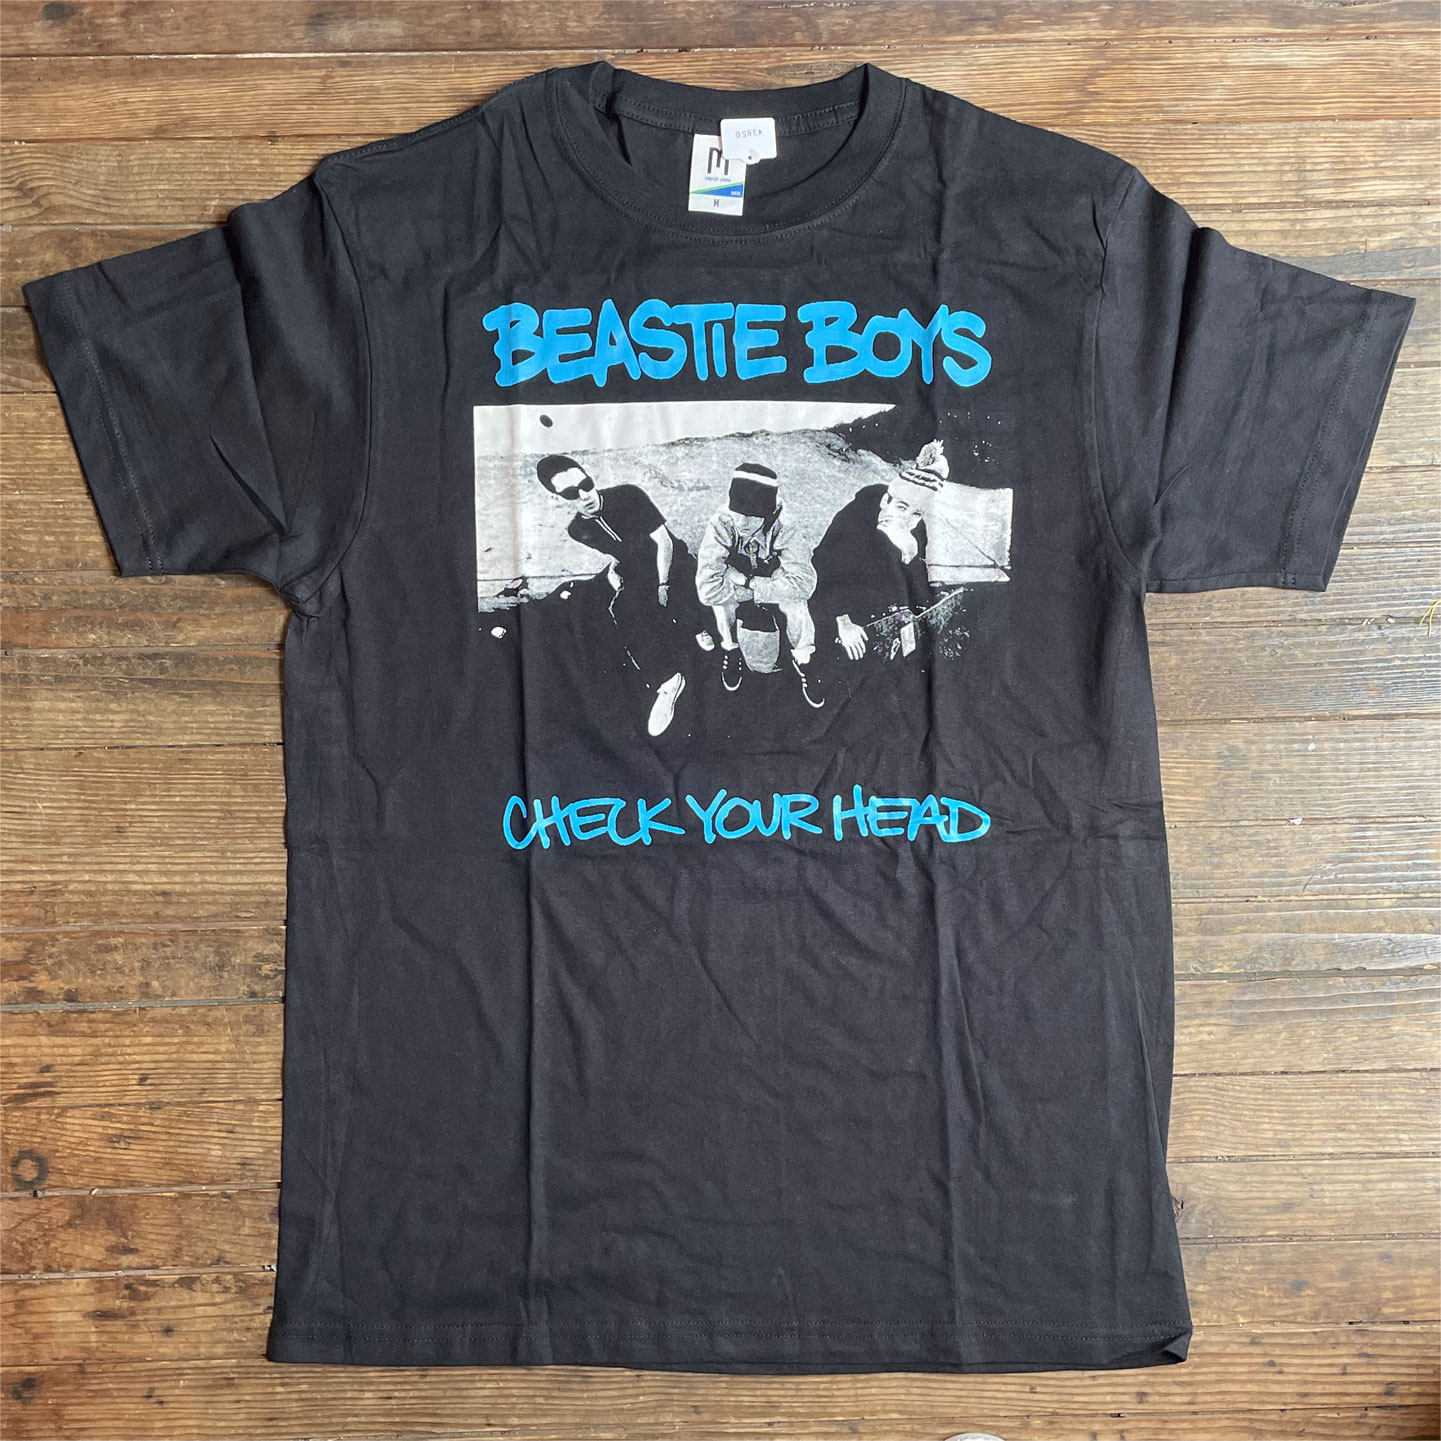 BEASTIE BOYS Tシャツ check your head XL検索用 - Tシャツ/カットソー ...